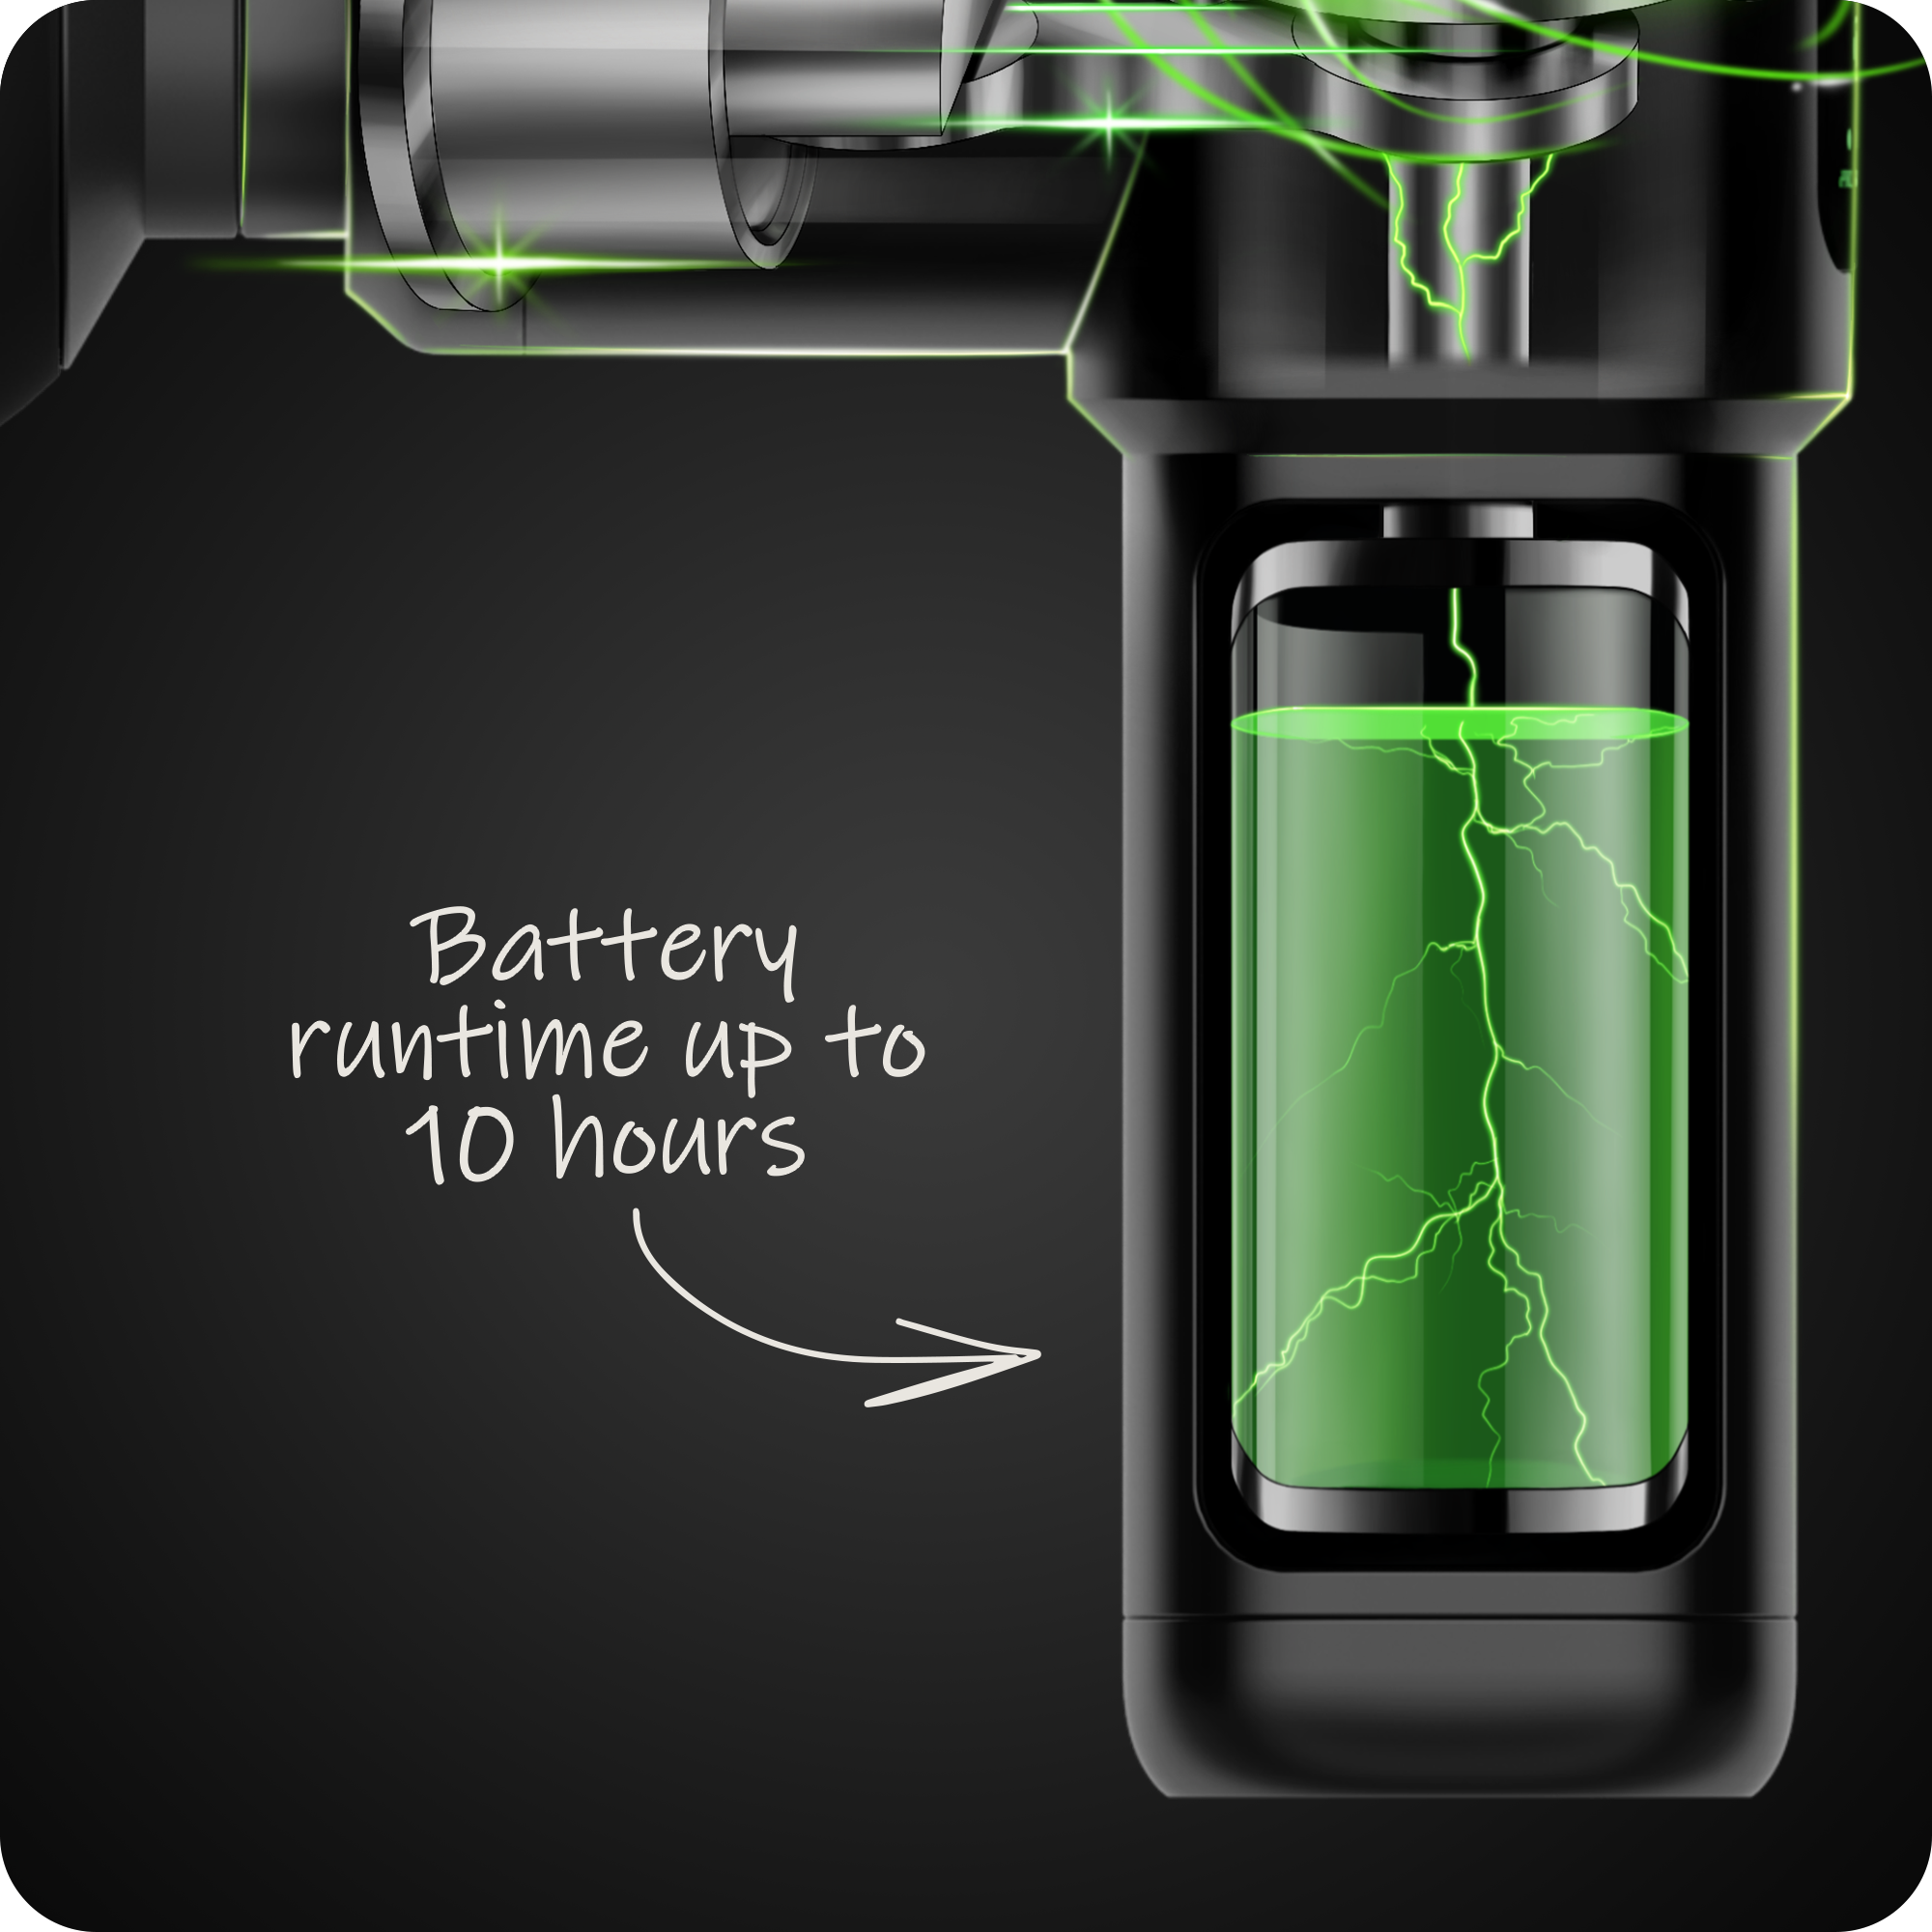 deep tissue massage gun powered by long-lasting Samsung battery